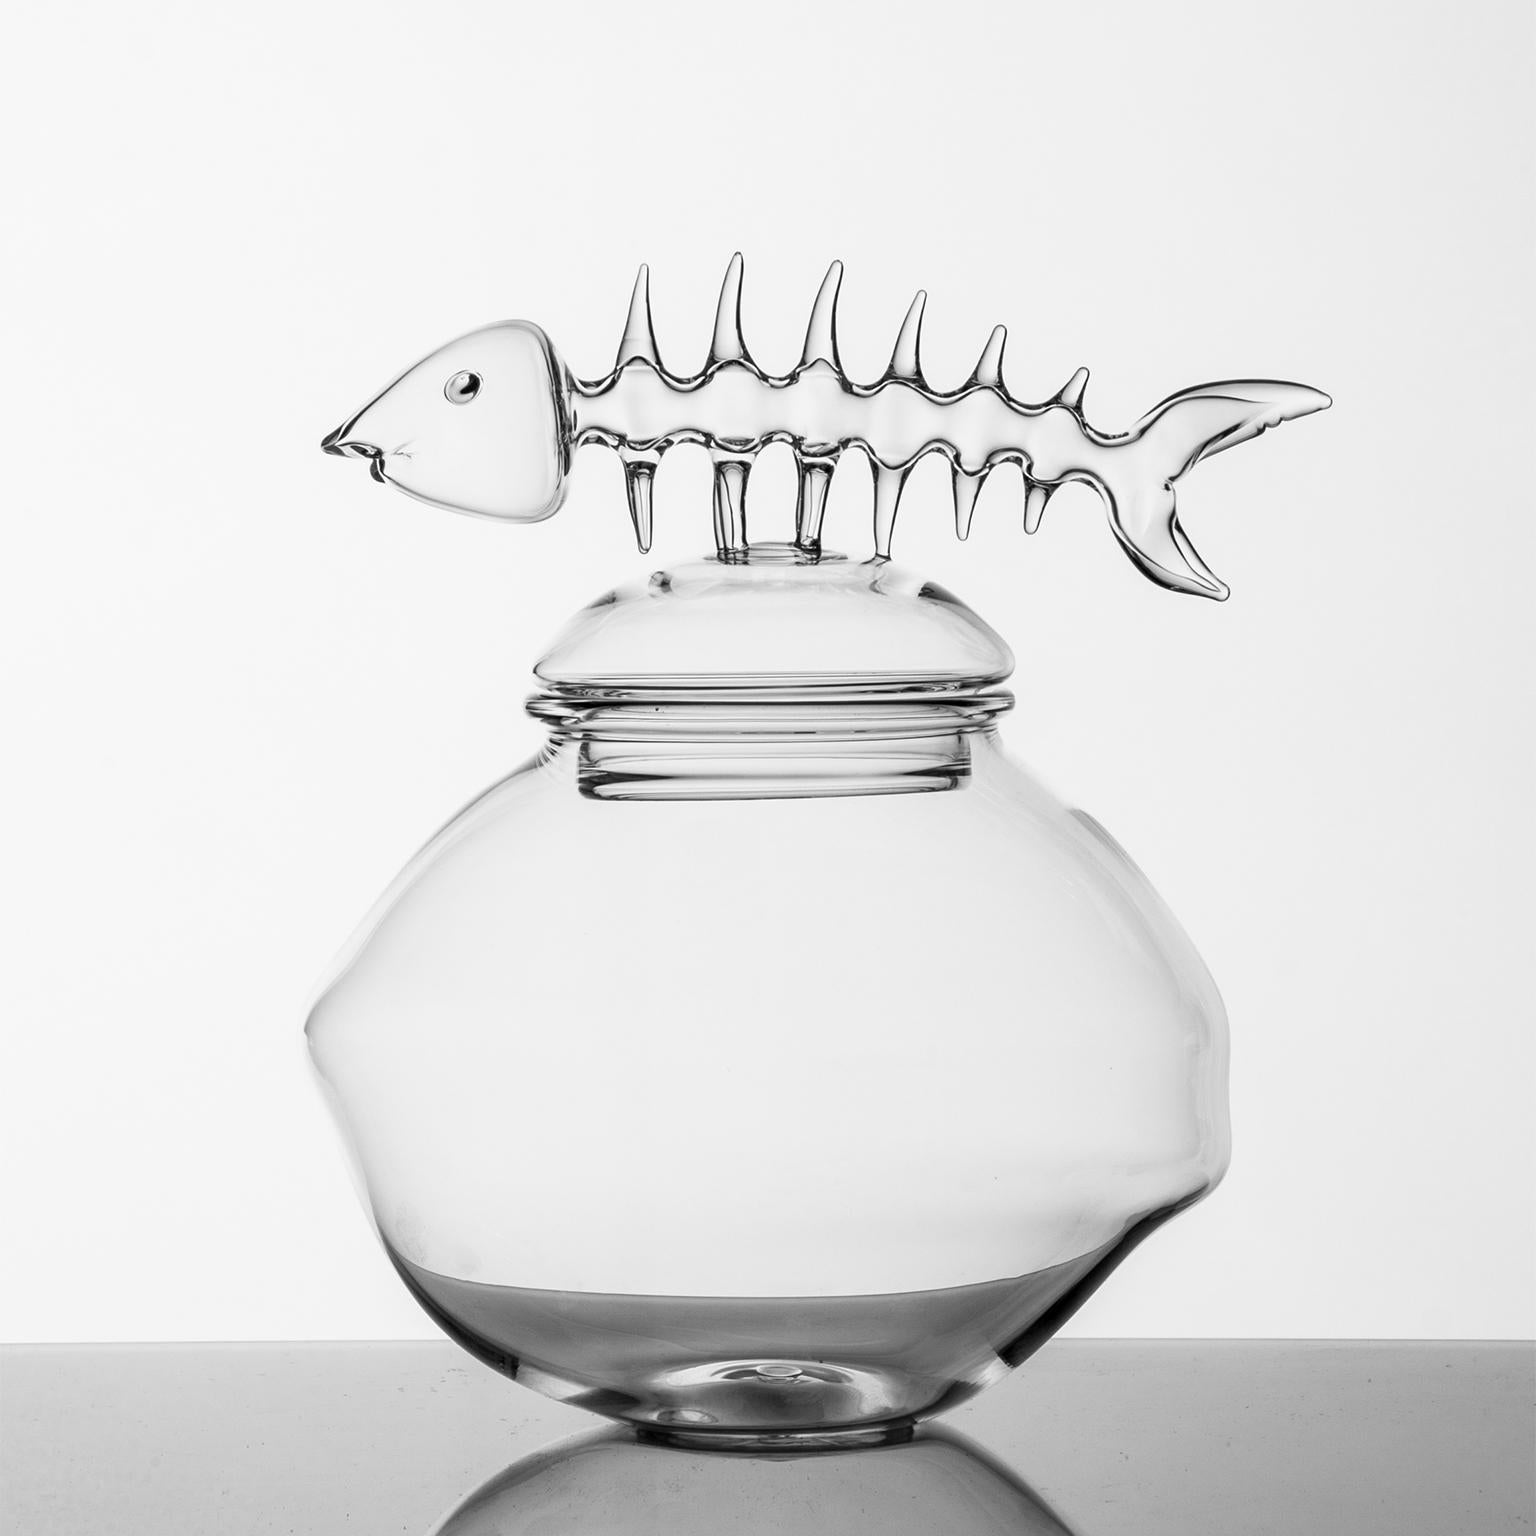 'Esca Jar'
A Hand Blown Glass Jar by Simone Crestani

